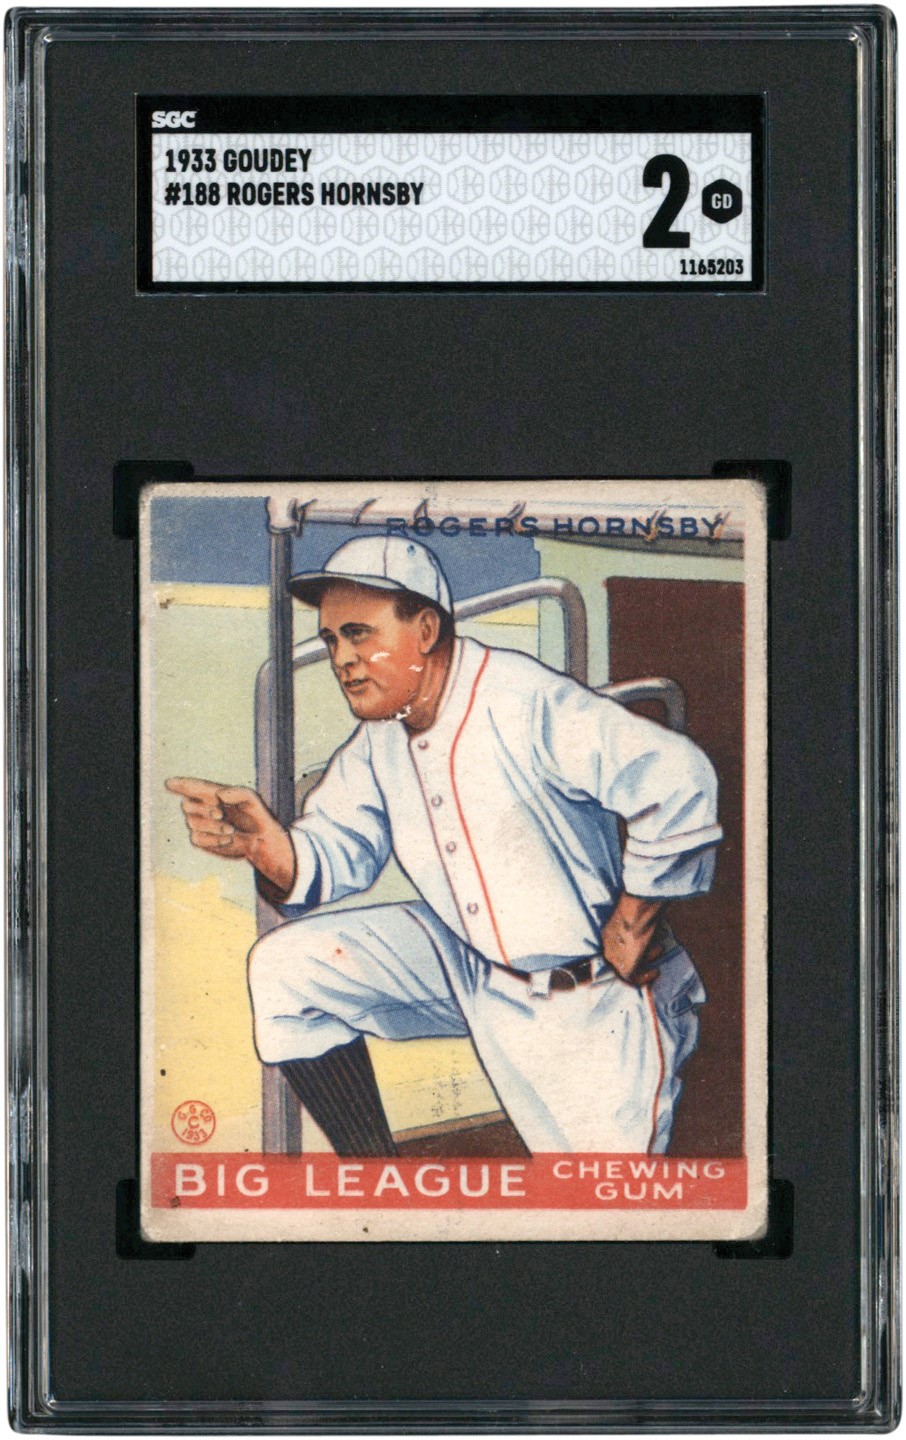 1933 Goudey Baseball #188 Rogers Hornsby SGC GD 2